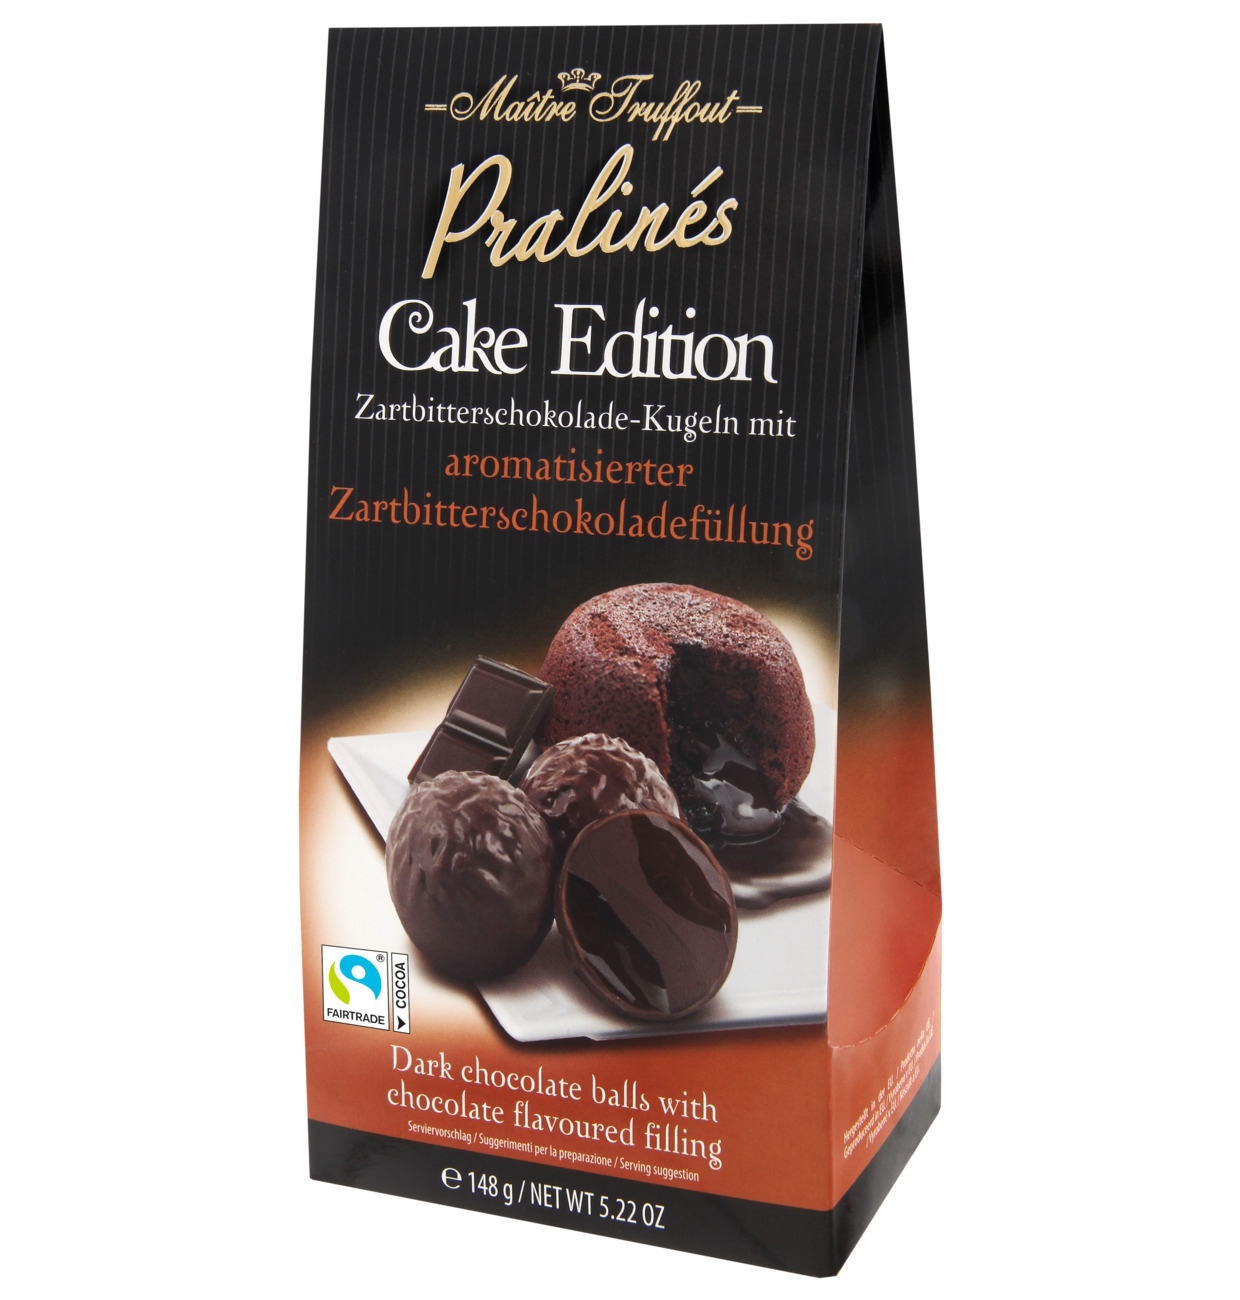 Praline-cake-edition-chocolate-negro-148g-